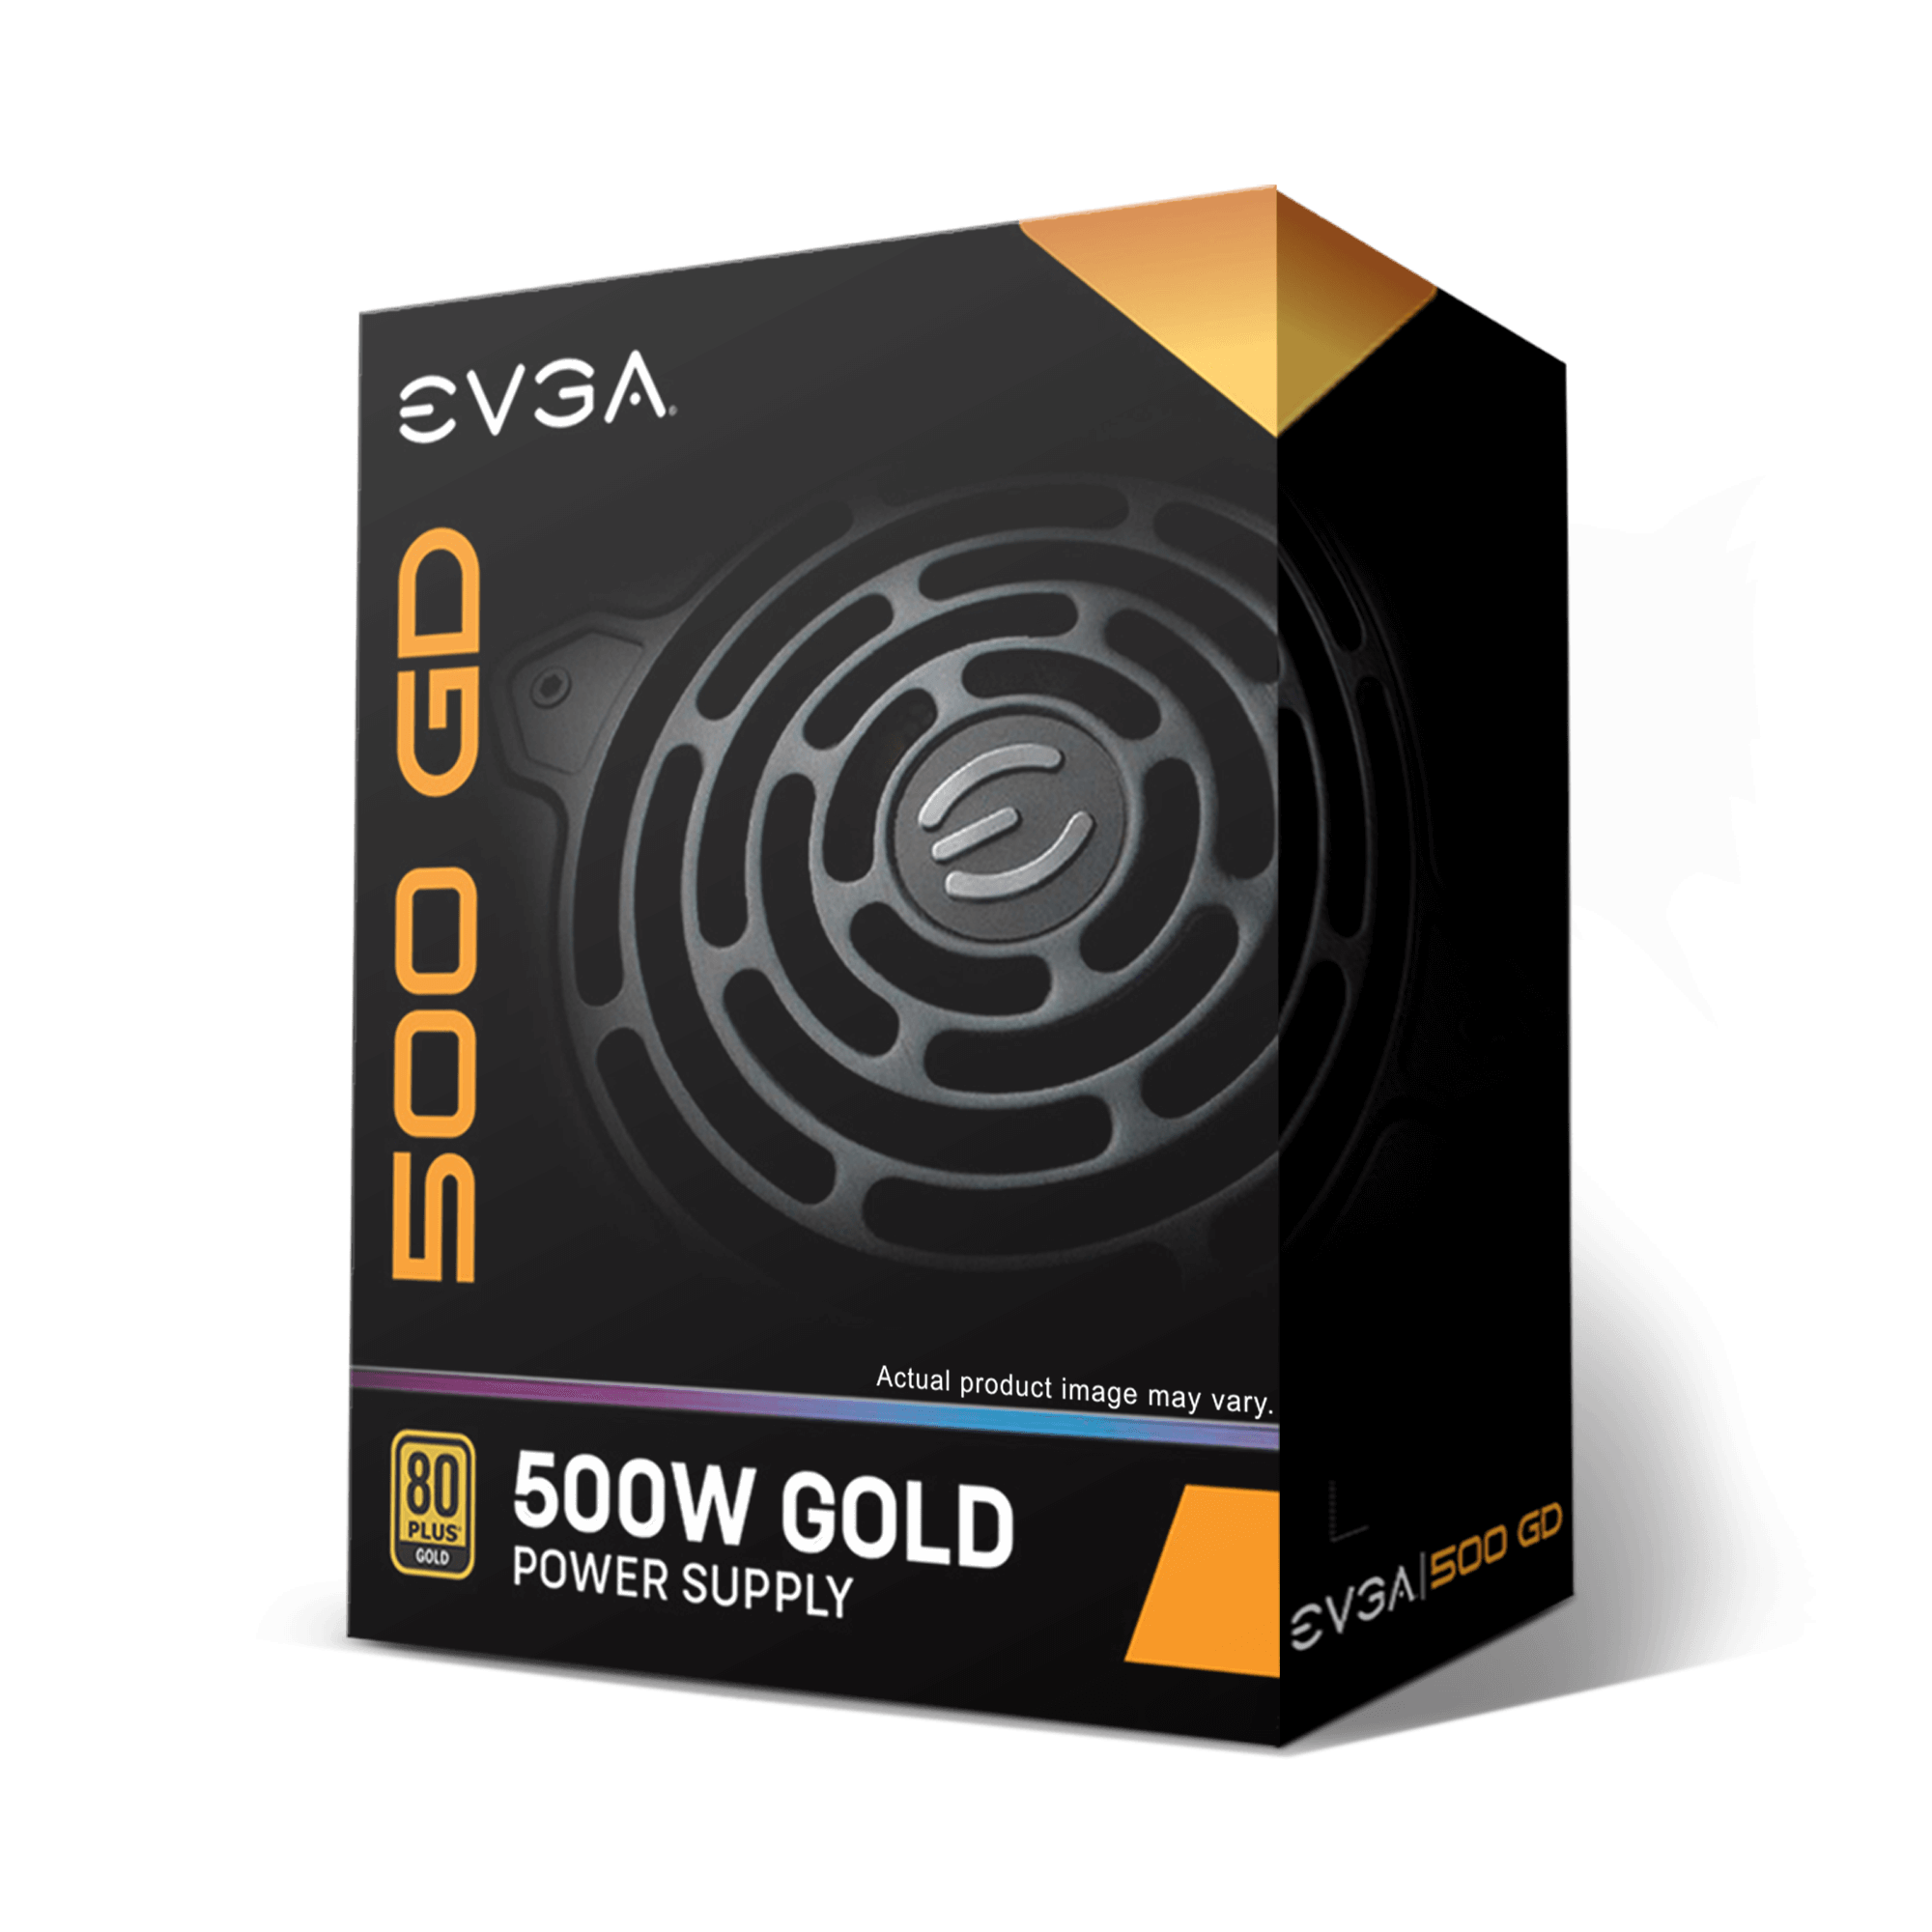 EVGA - Products - EVGA 500 GD, 80+ GOLD 500W, 5 Year Warranty 